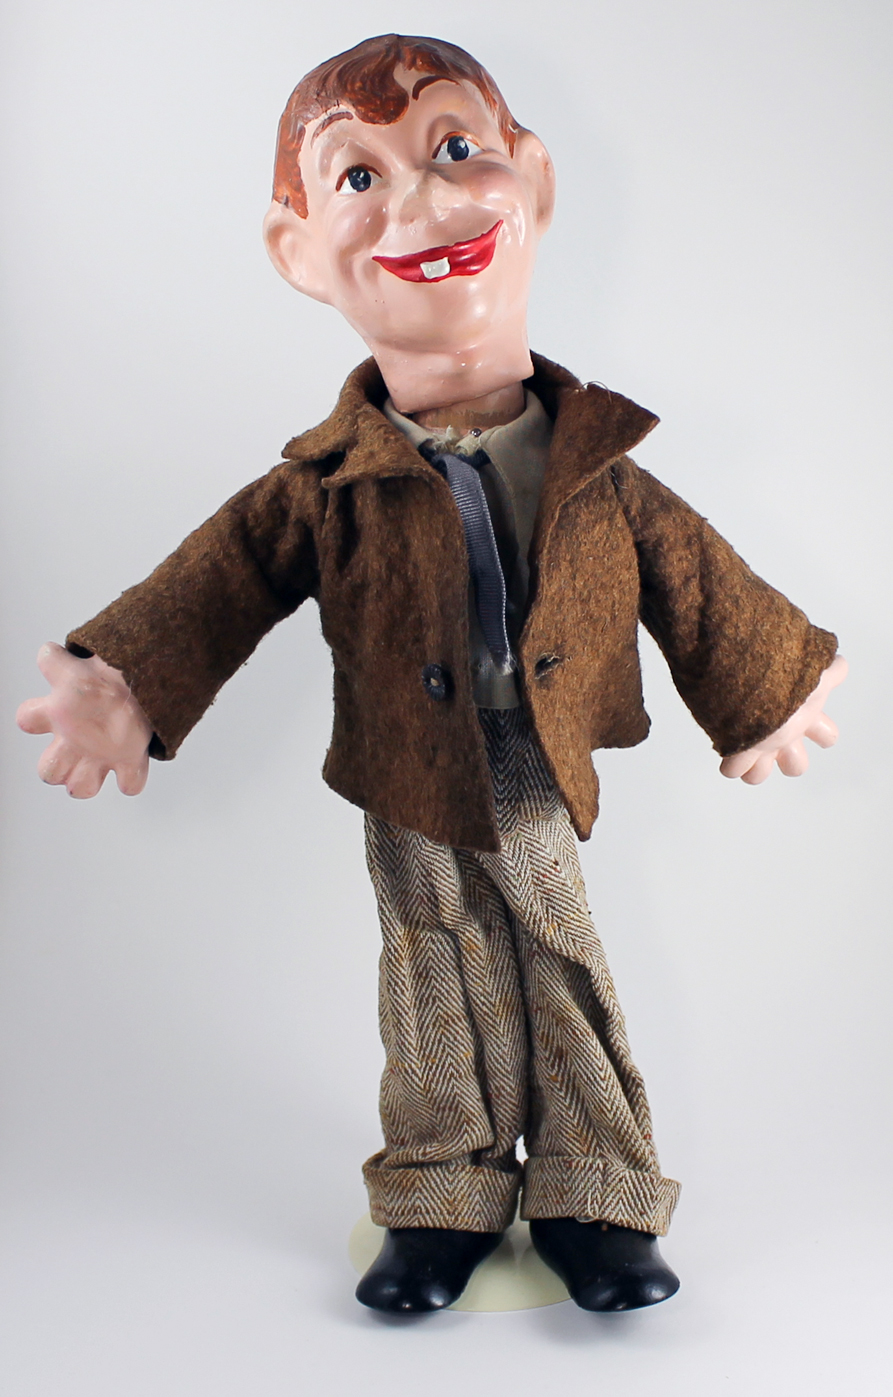 Mortimer Snerd Antique Character Doll Edgar Bergen